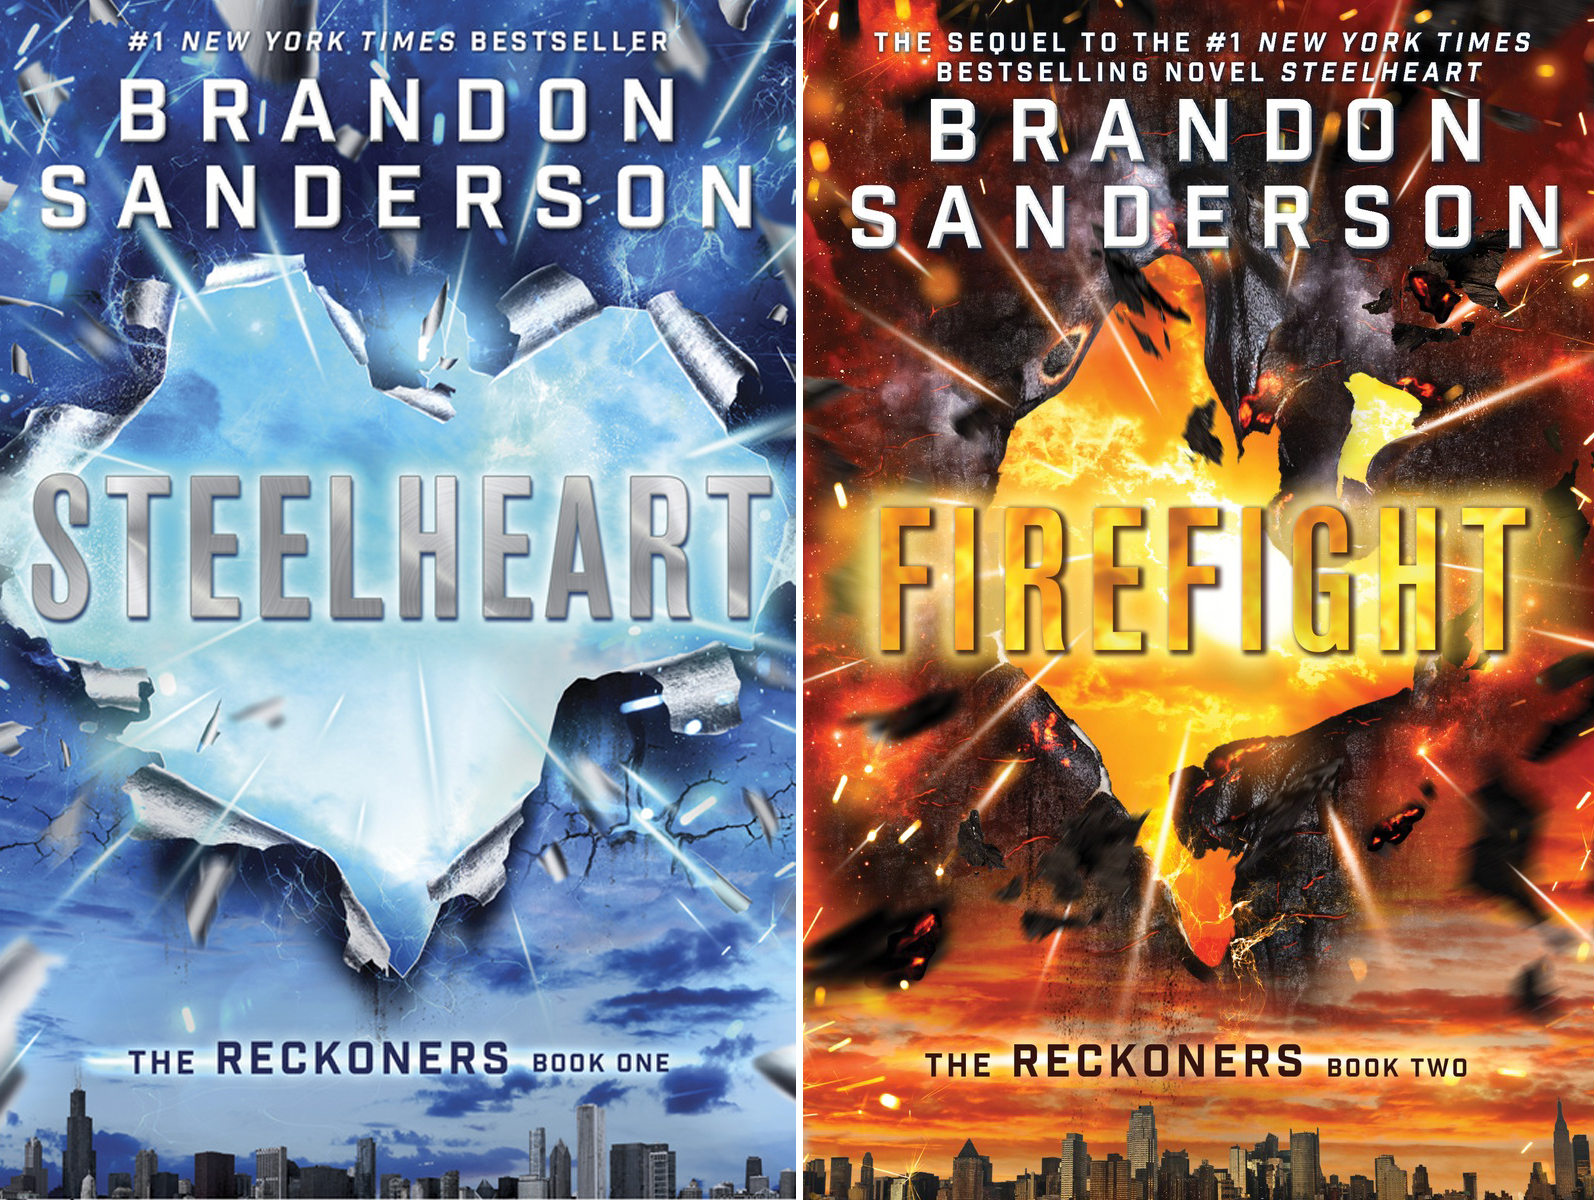 REVIEW: Firefight by Brandon Sanderson